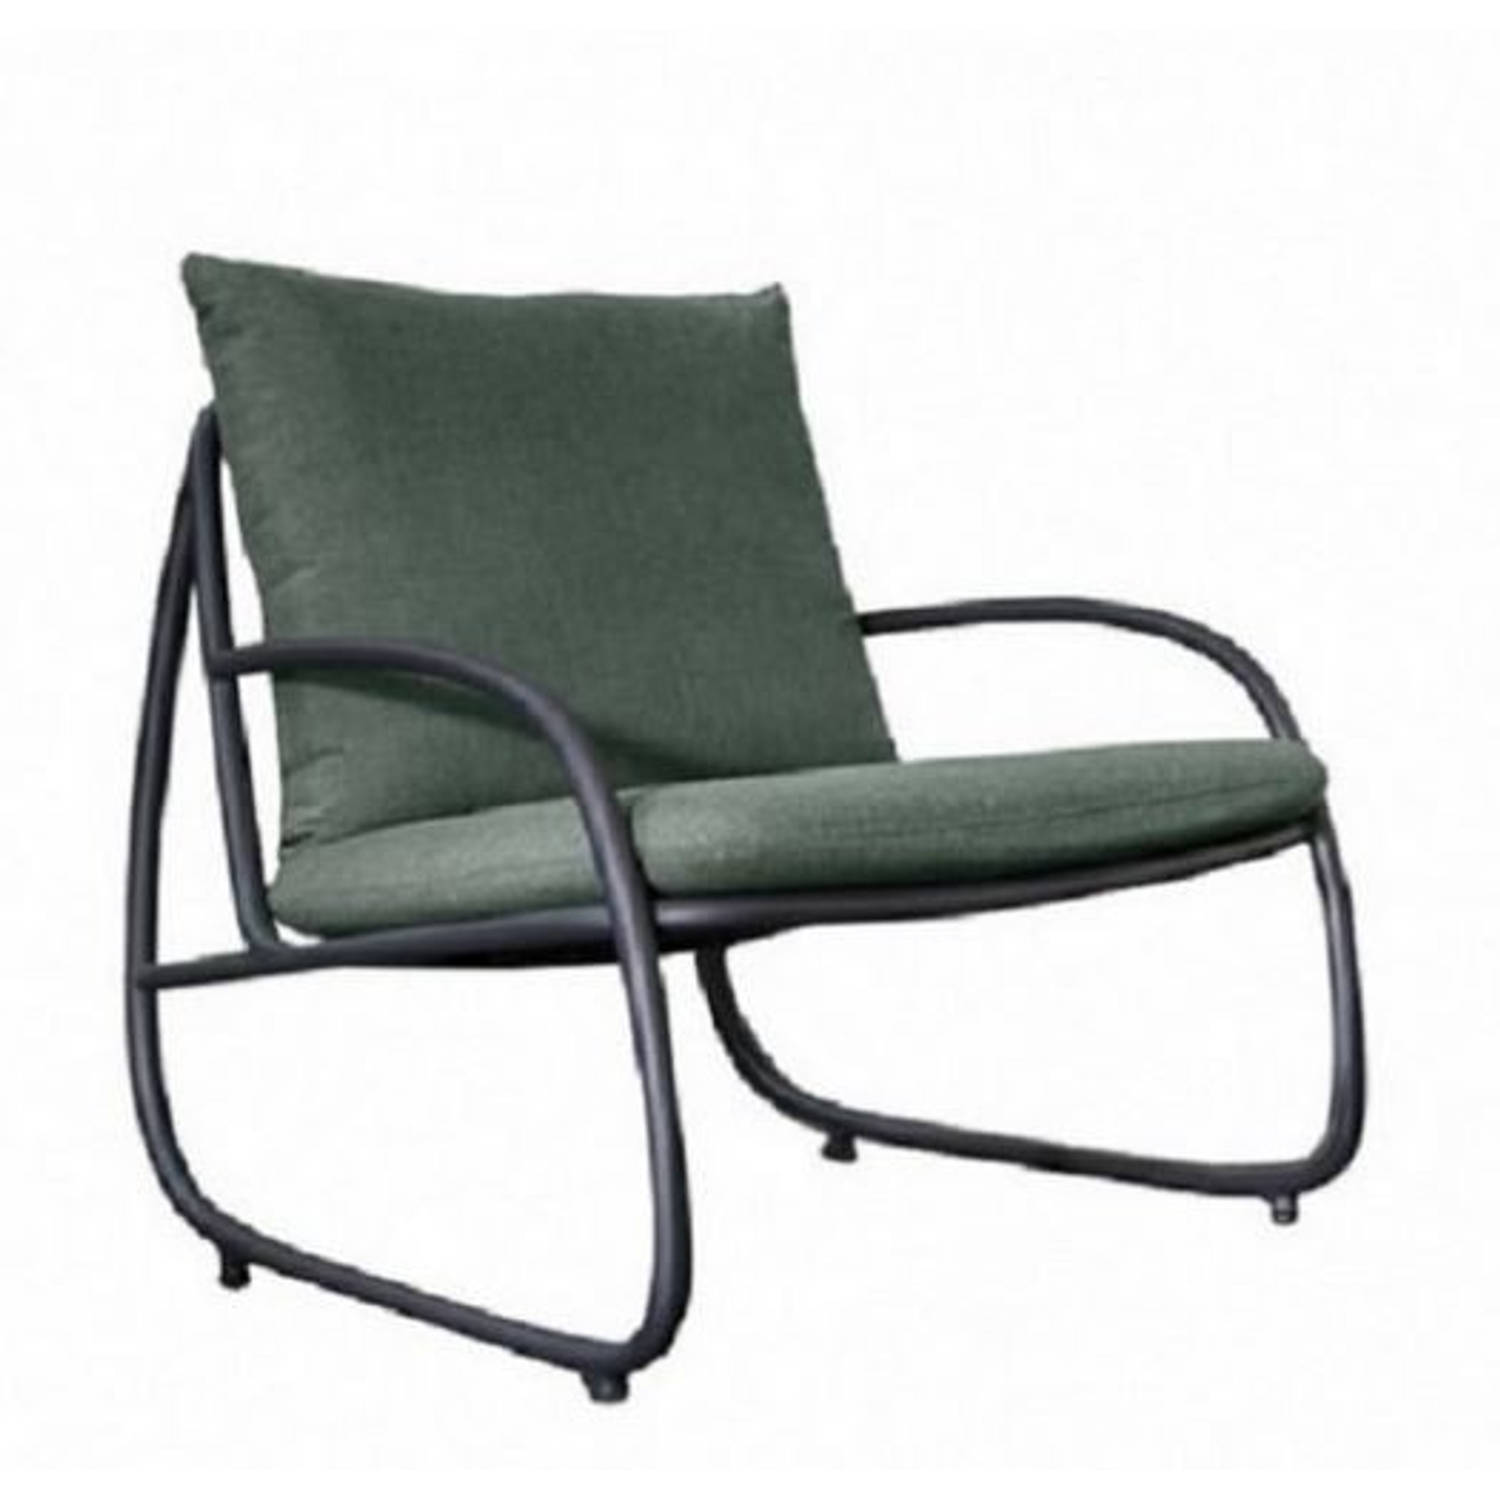 Yoi - Youkou lounge chair alu black/almond green